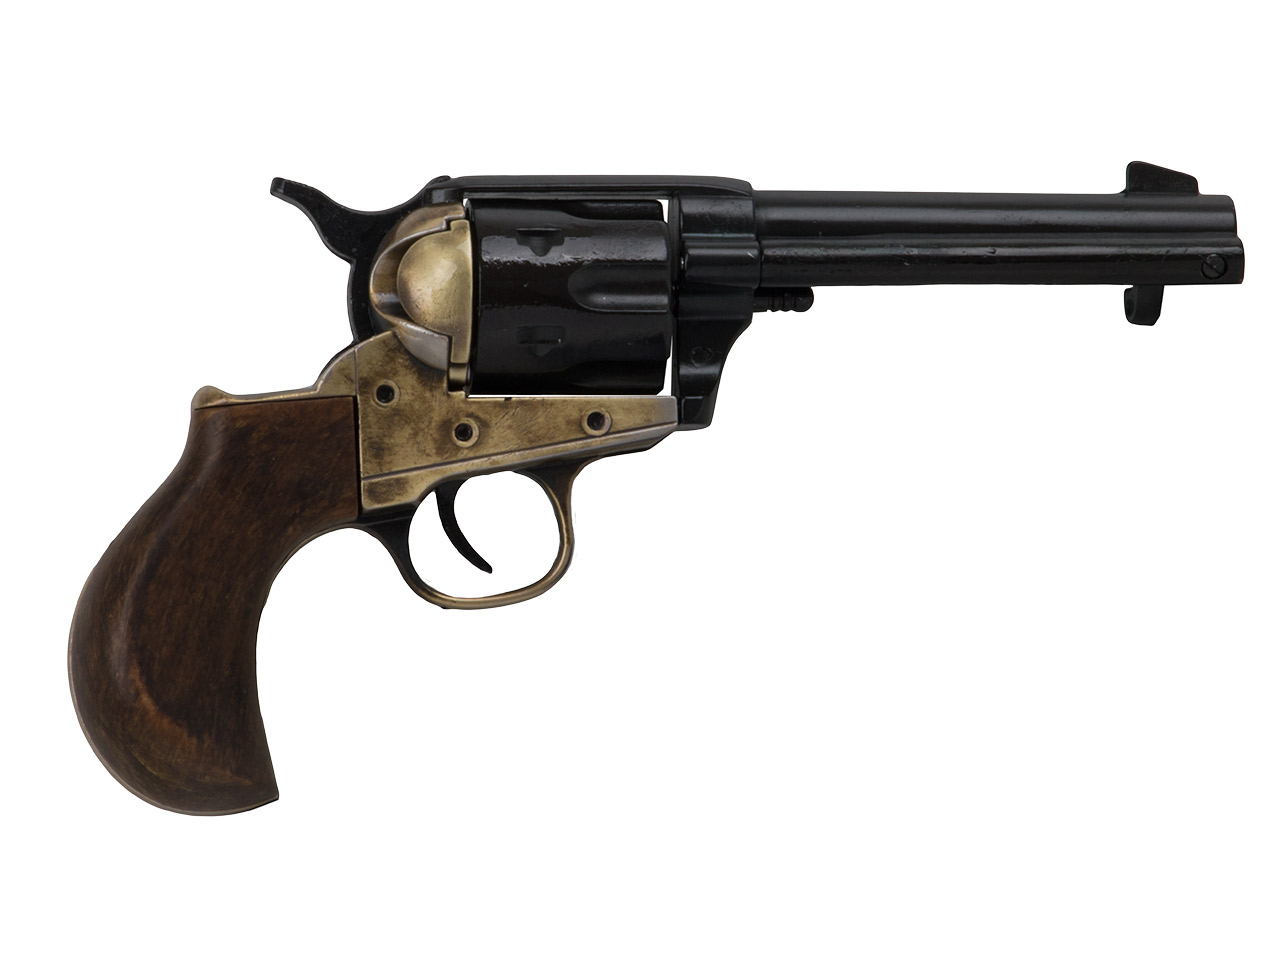 Deko Revolver Kolser Colt Thunderer Single Action Army .45 Peacemaker USA schwarz messing Holzoptikgriffschalen